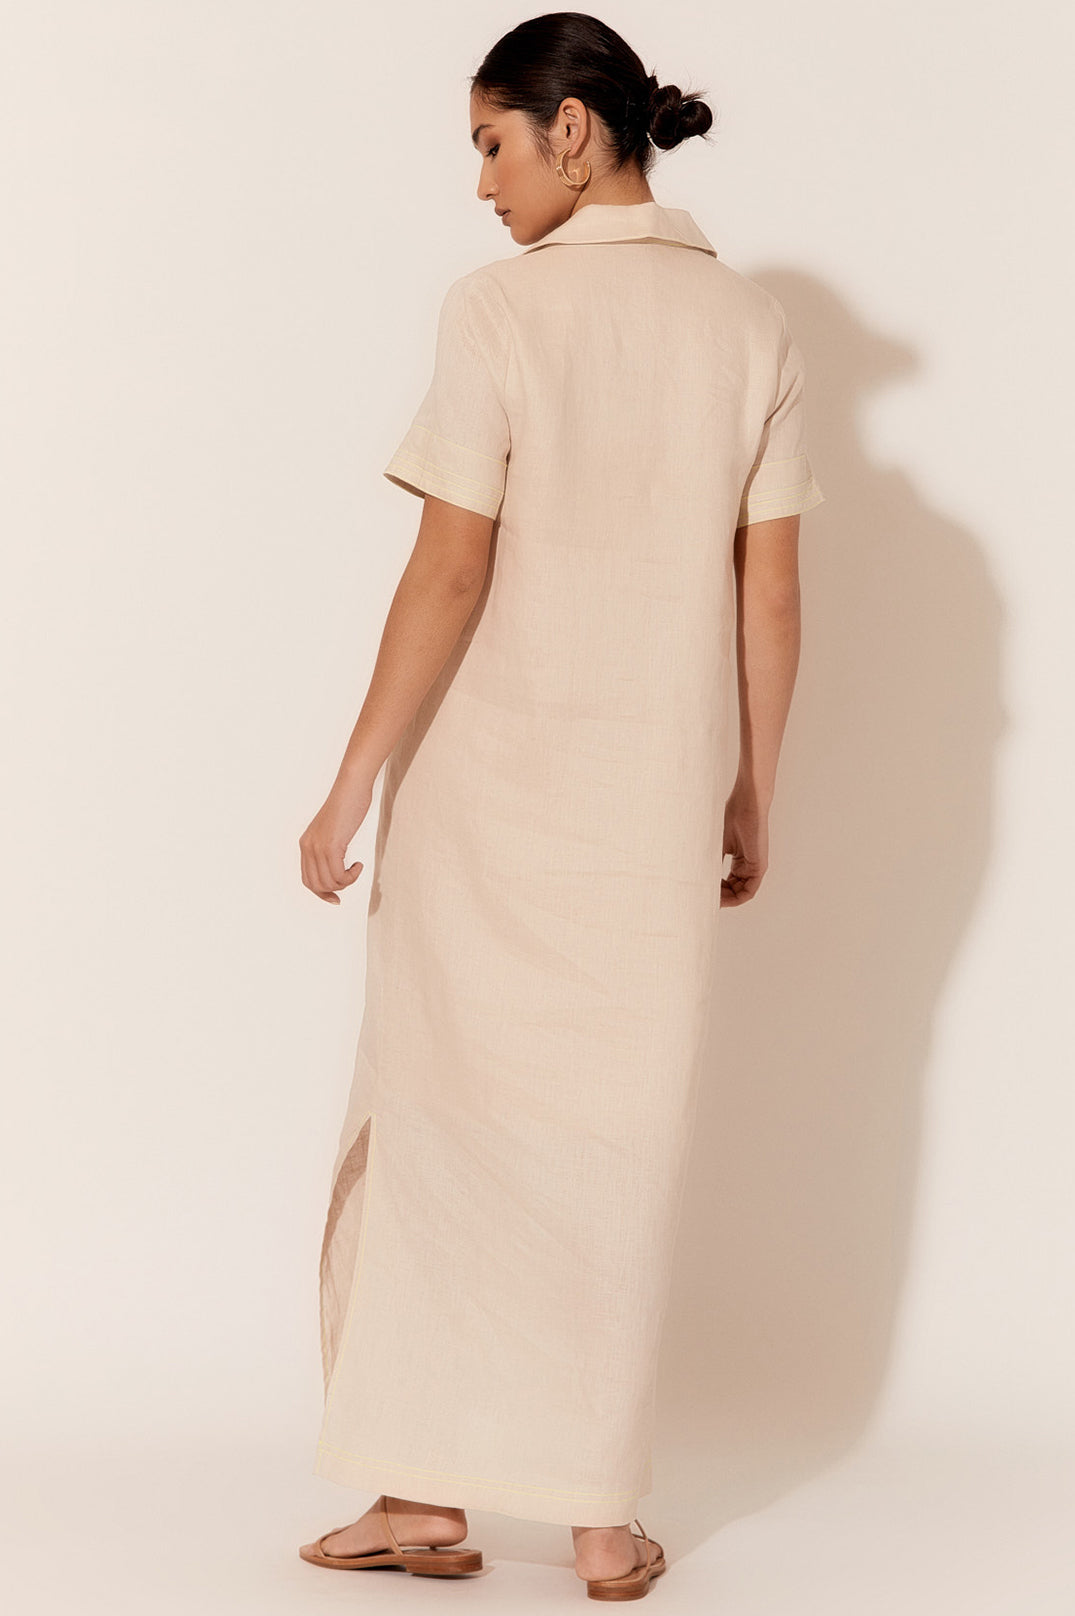 Adorne Melanie Contrast Stitch Linen Dress - Stone